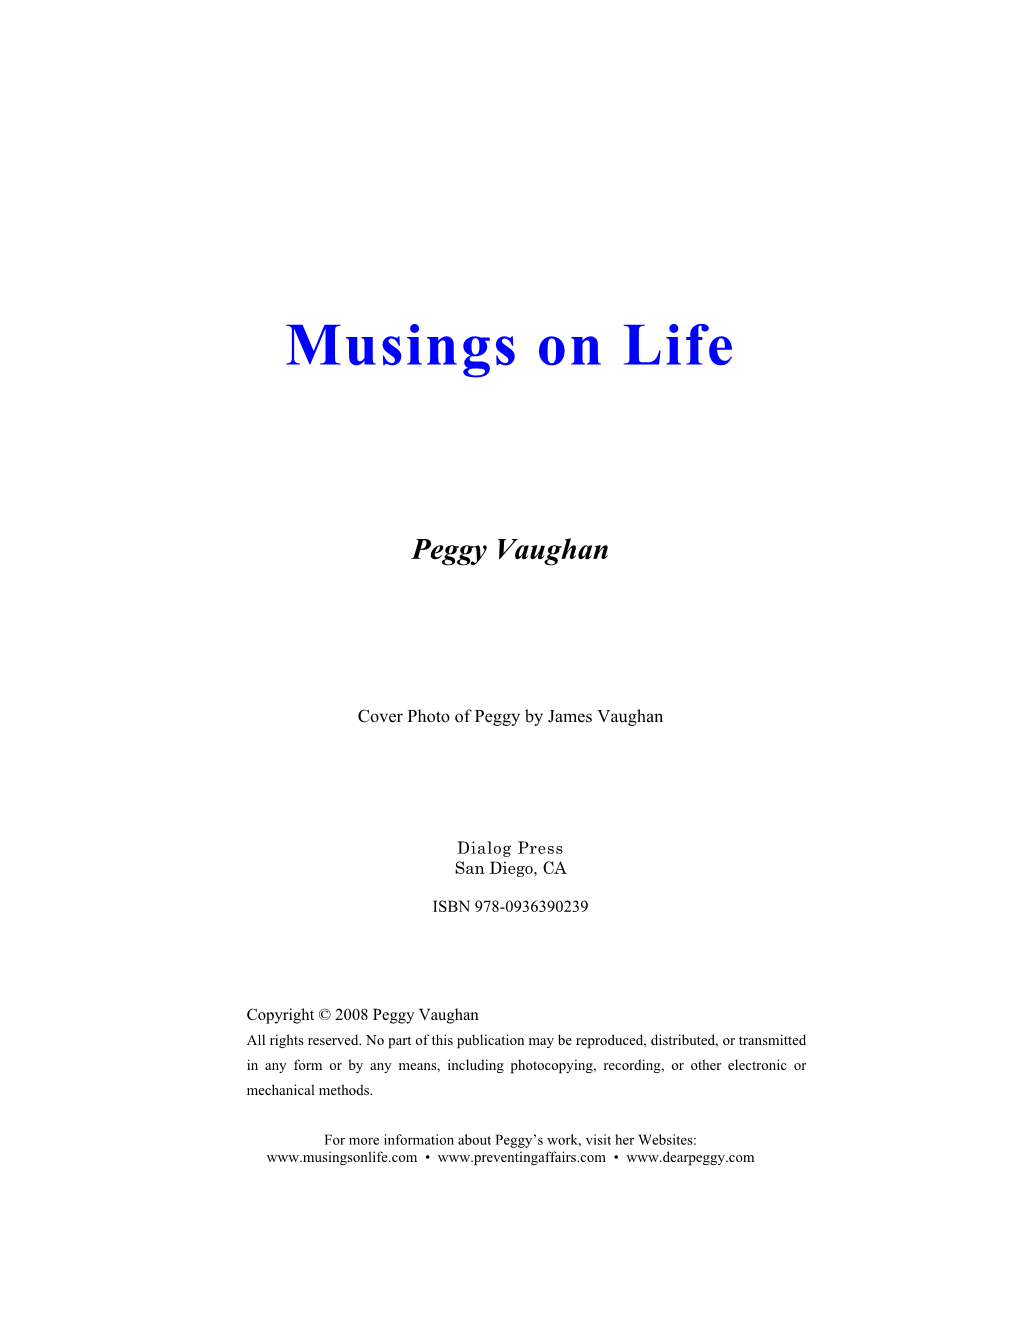 Free PDF of Musings on Life